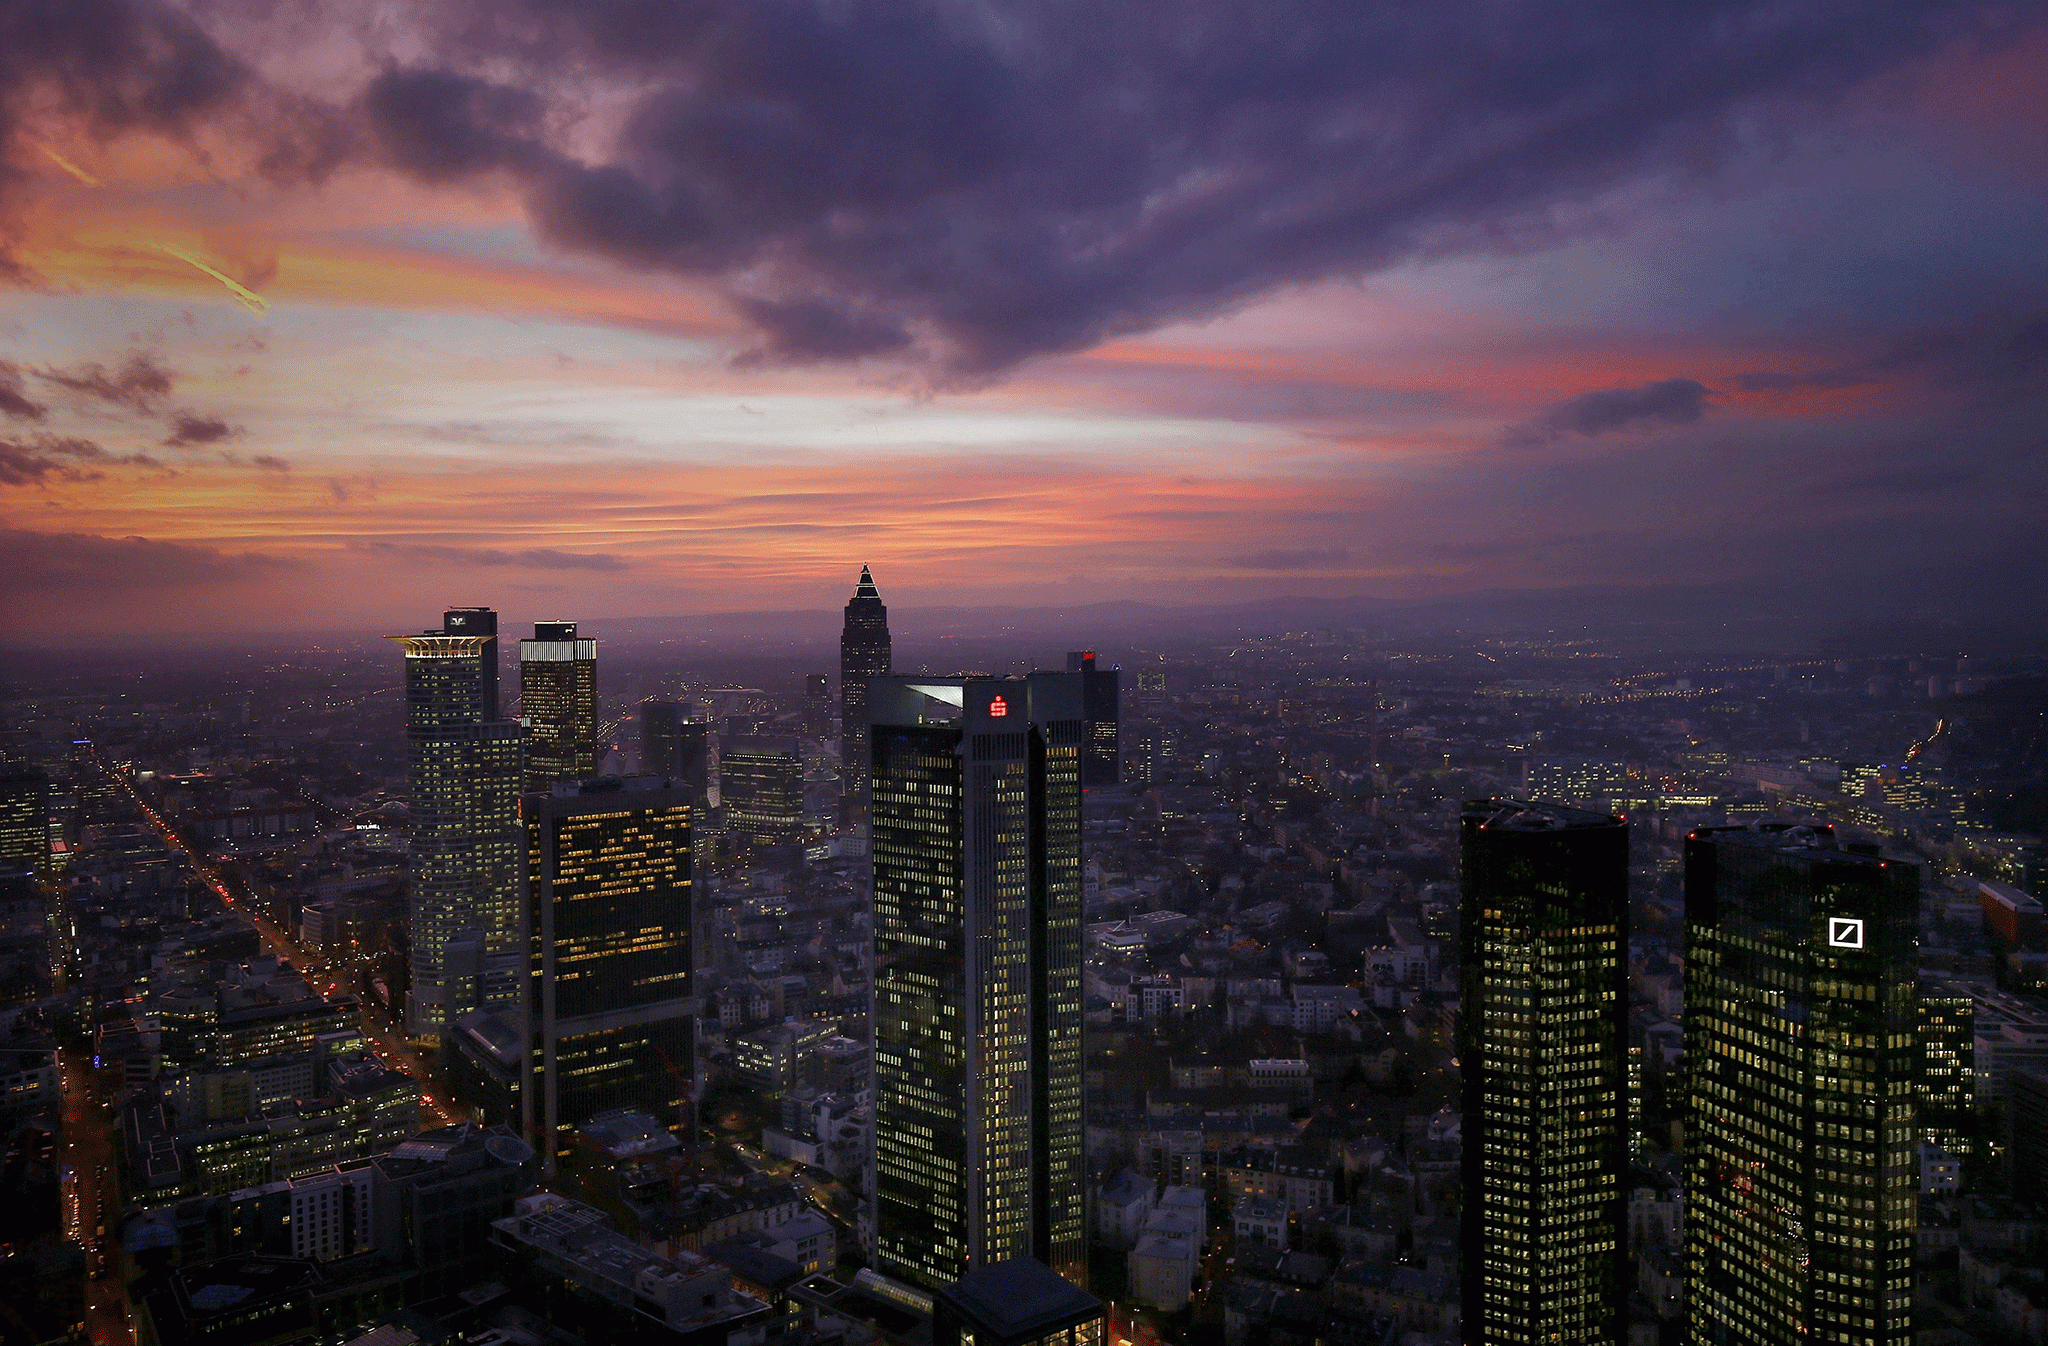 Frankfurt skyline - the British Bankers' Association says Europe needs the UK's financial expertise